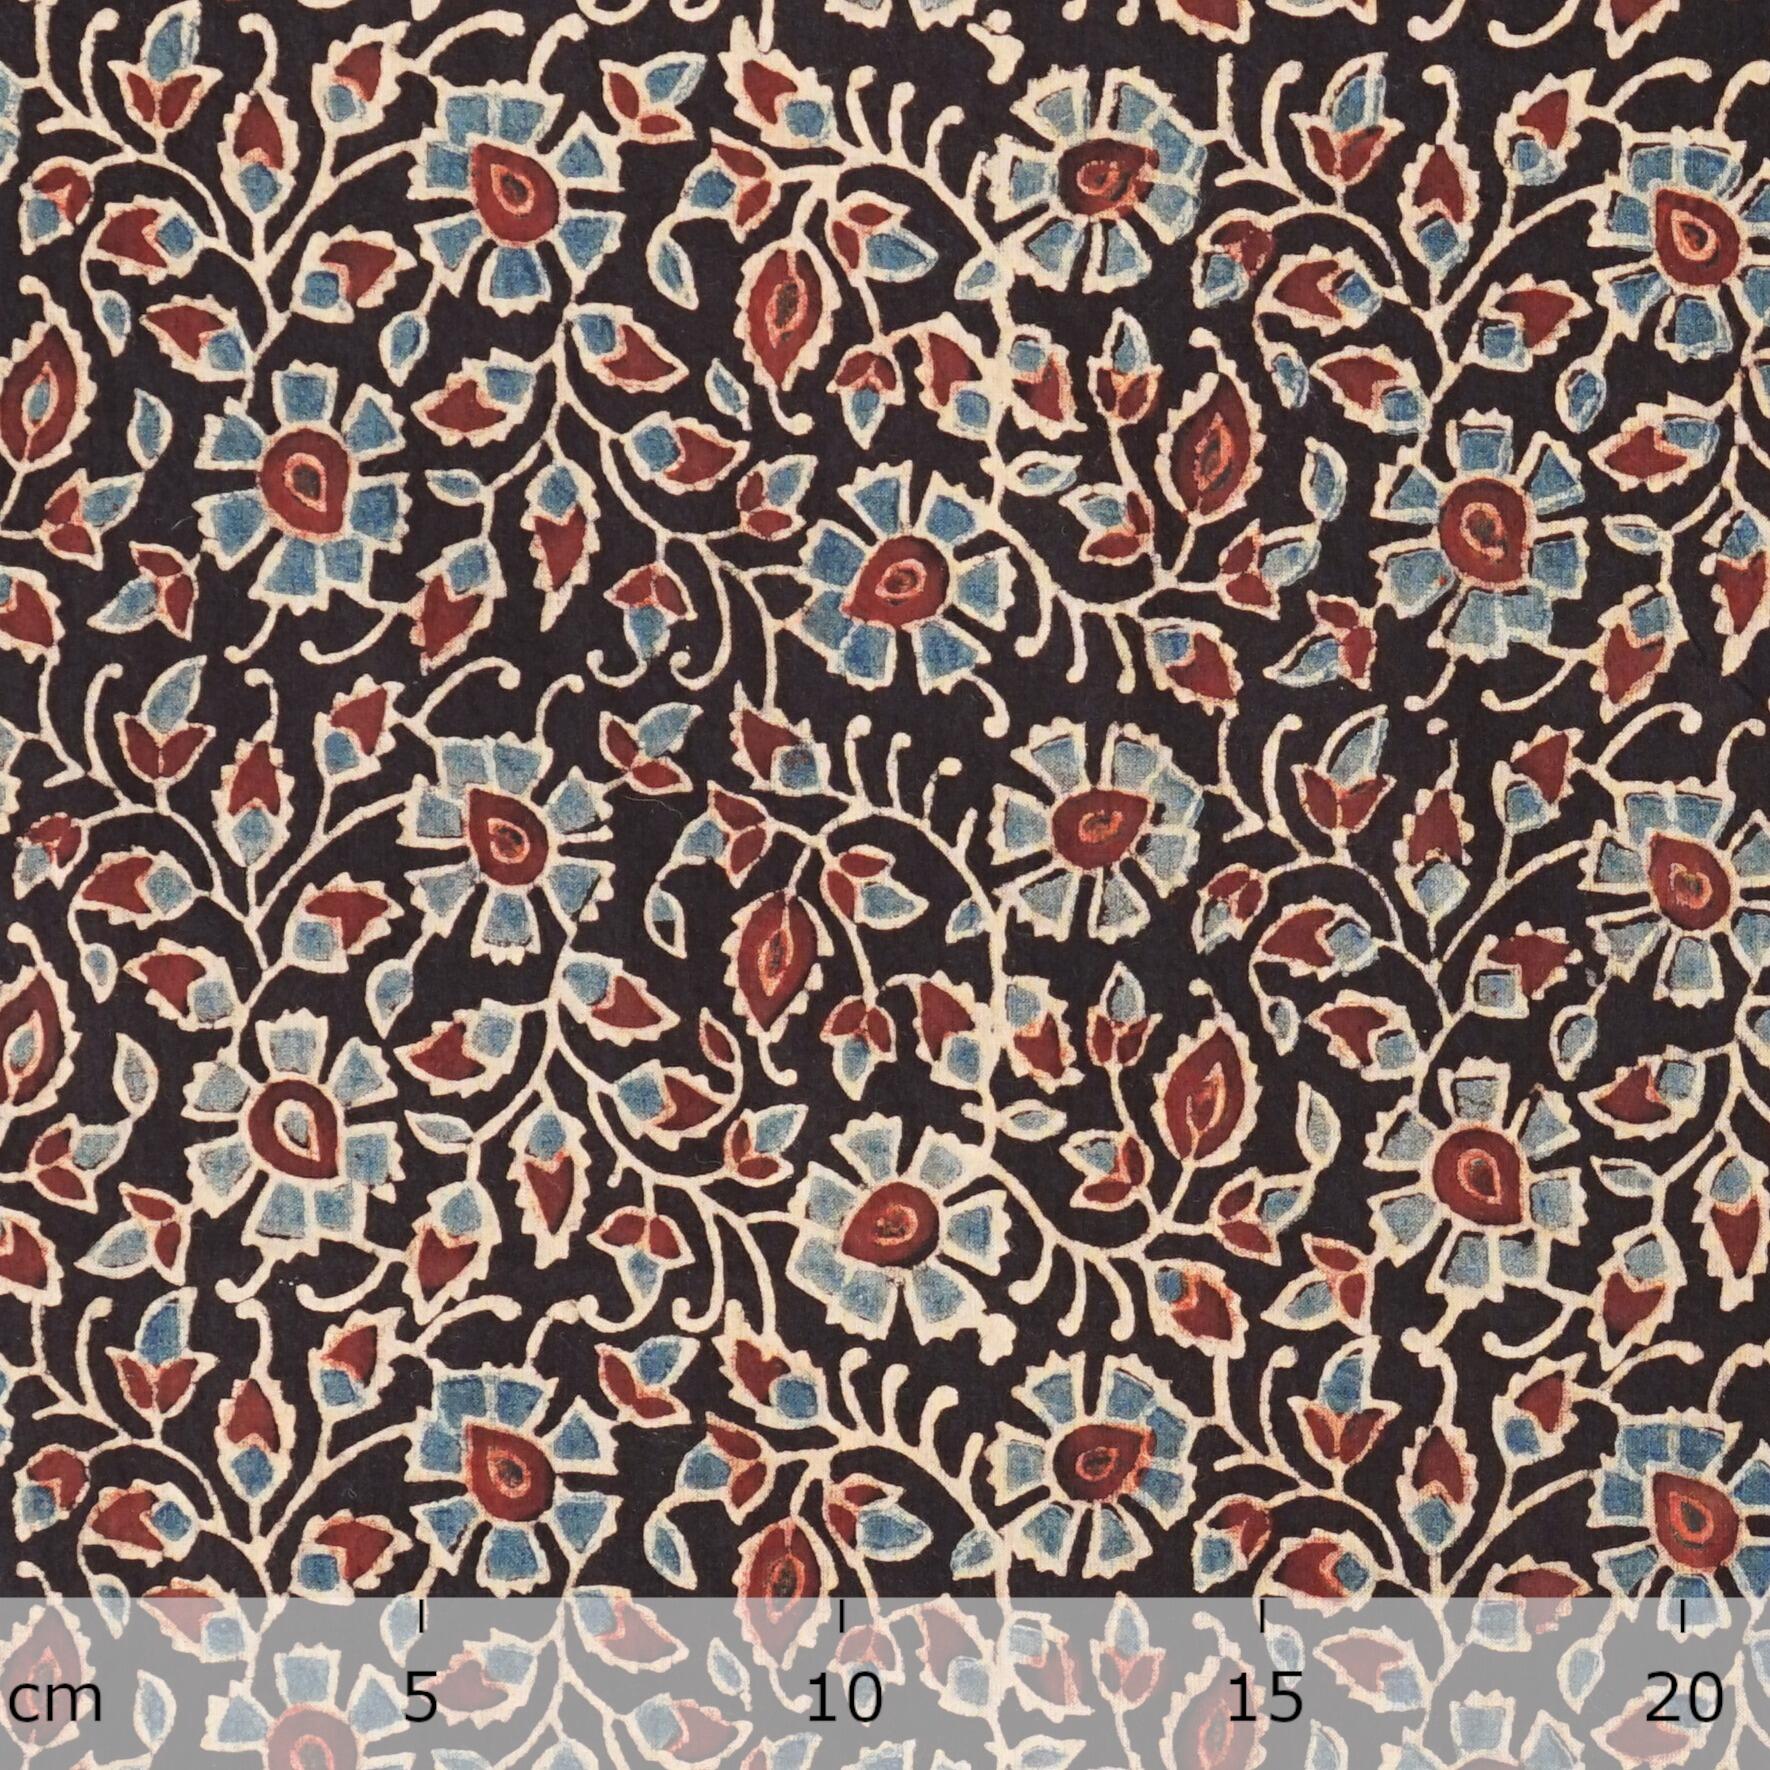 SIK37 - Indian Block-Printed Cotton - Nujiang Design - Indigo, Alizarin and Black Dye - Ruler